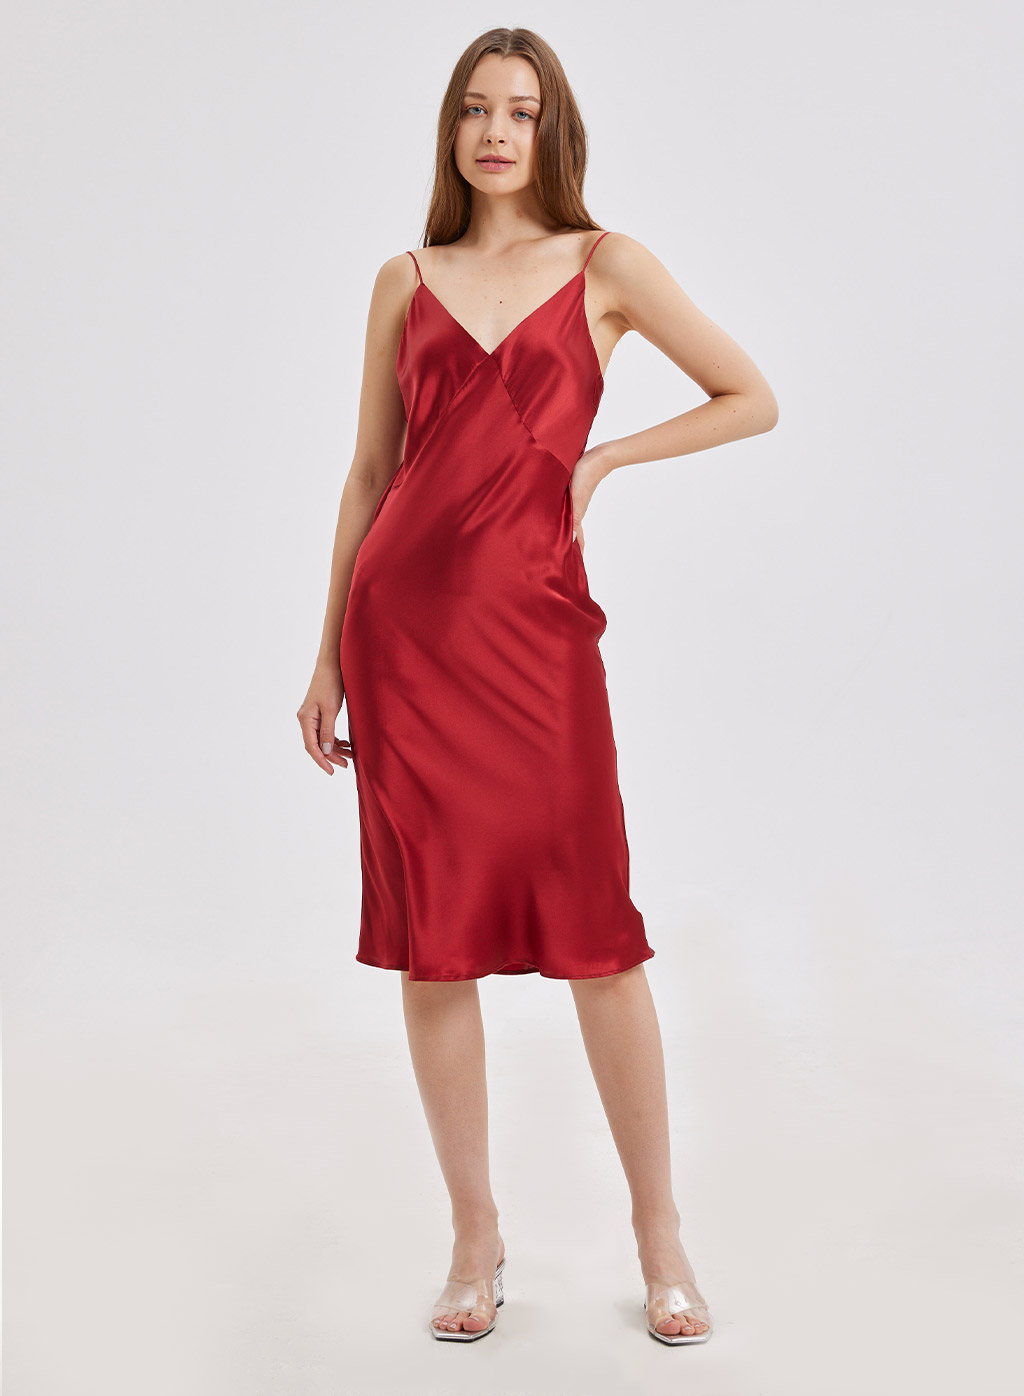 Red Silk Dress, Satin Slip & Silky Dresses